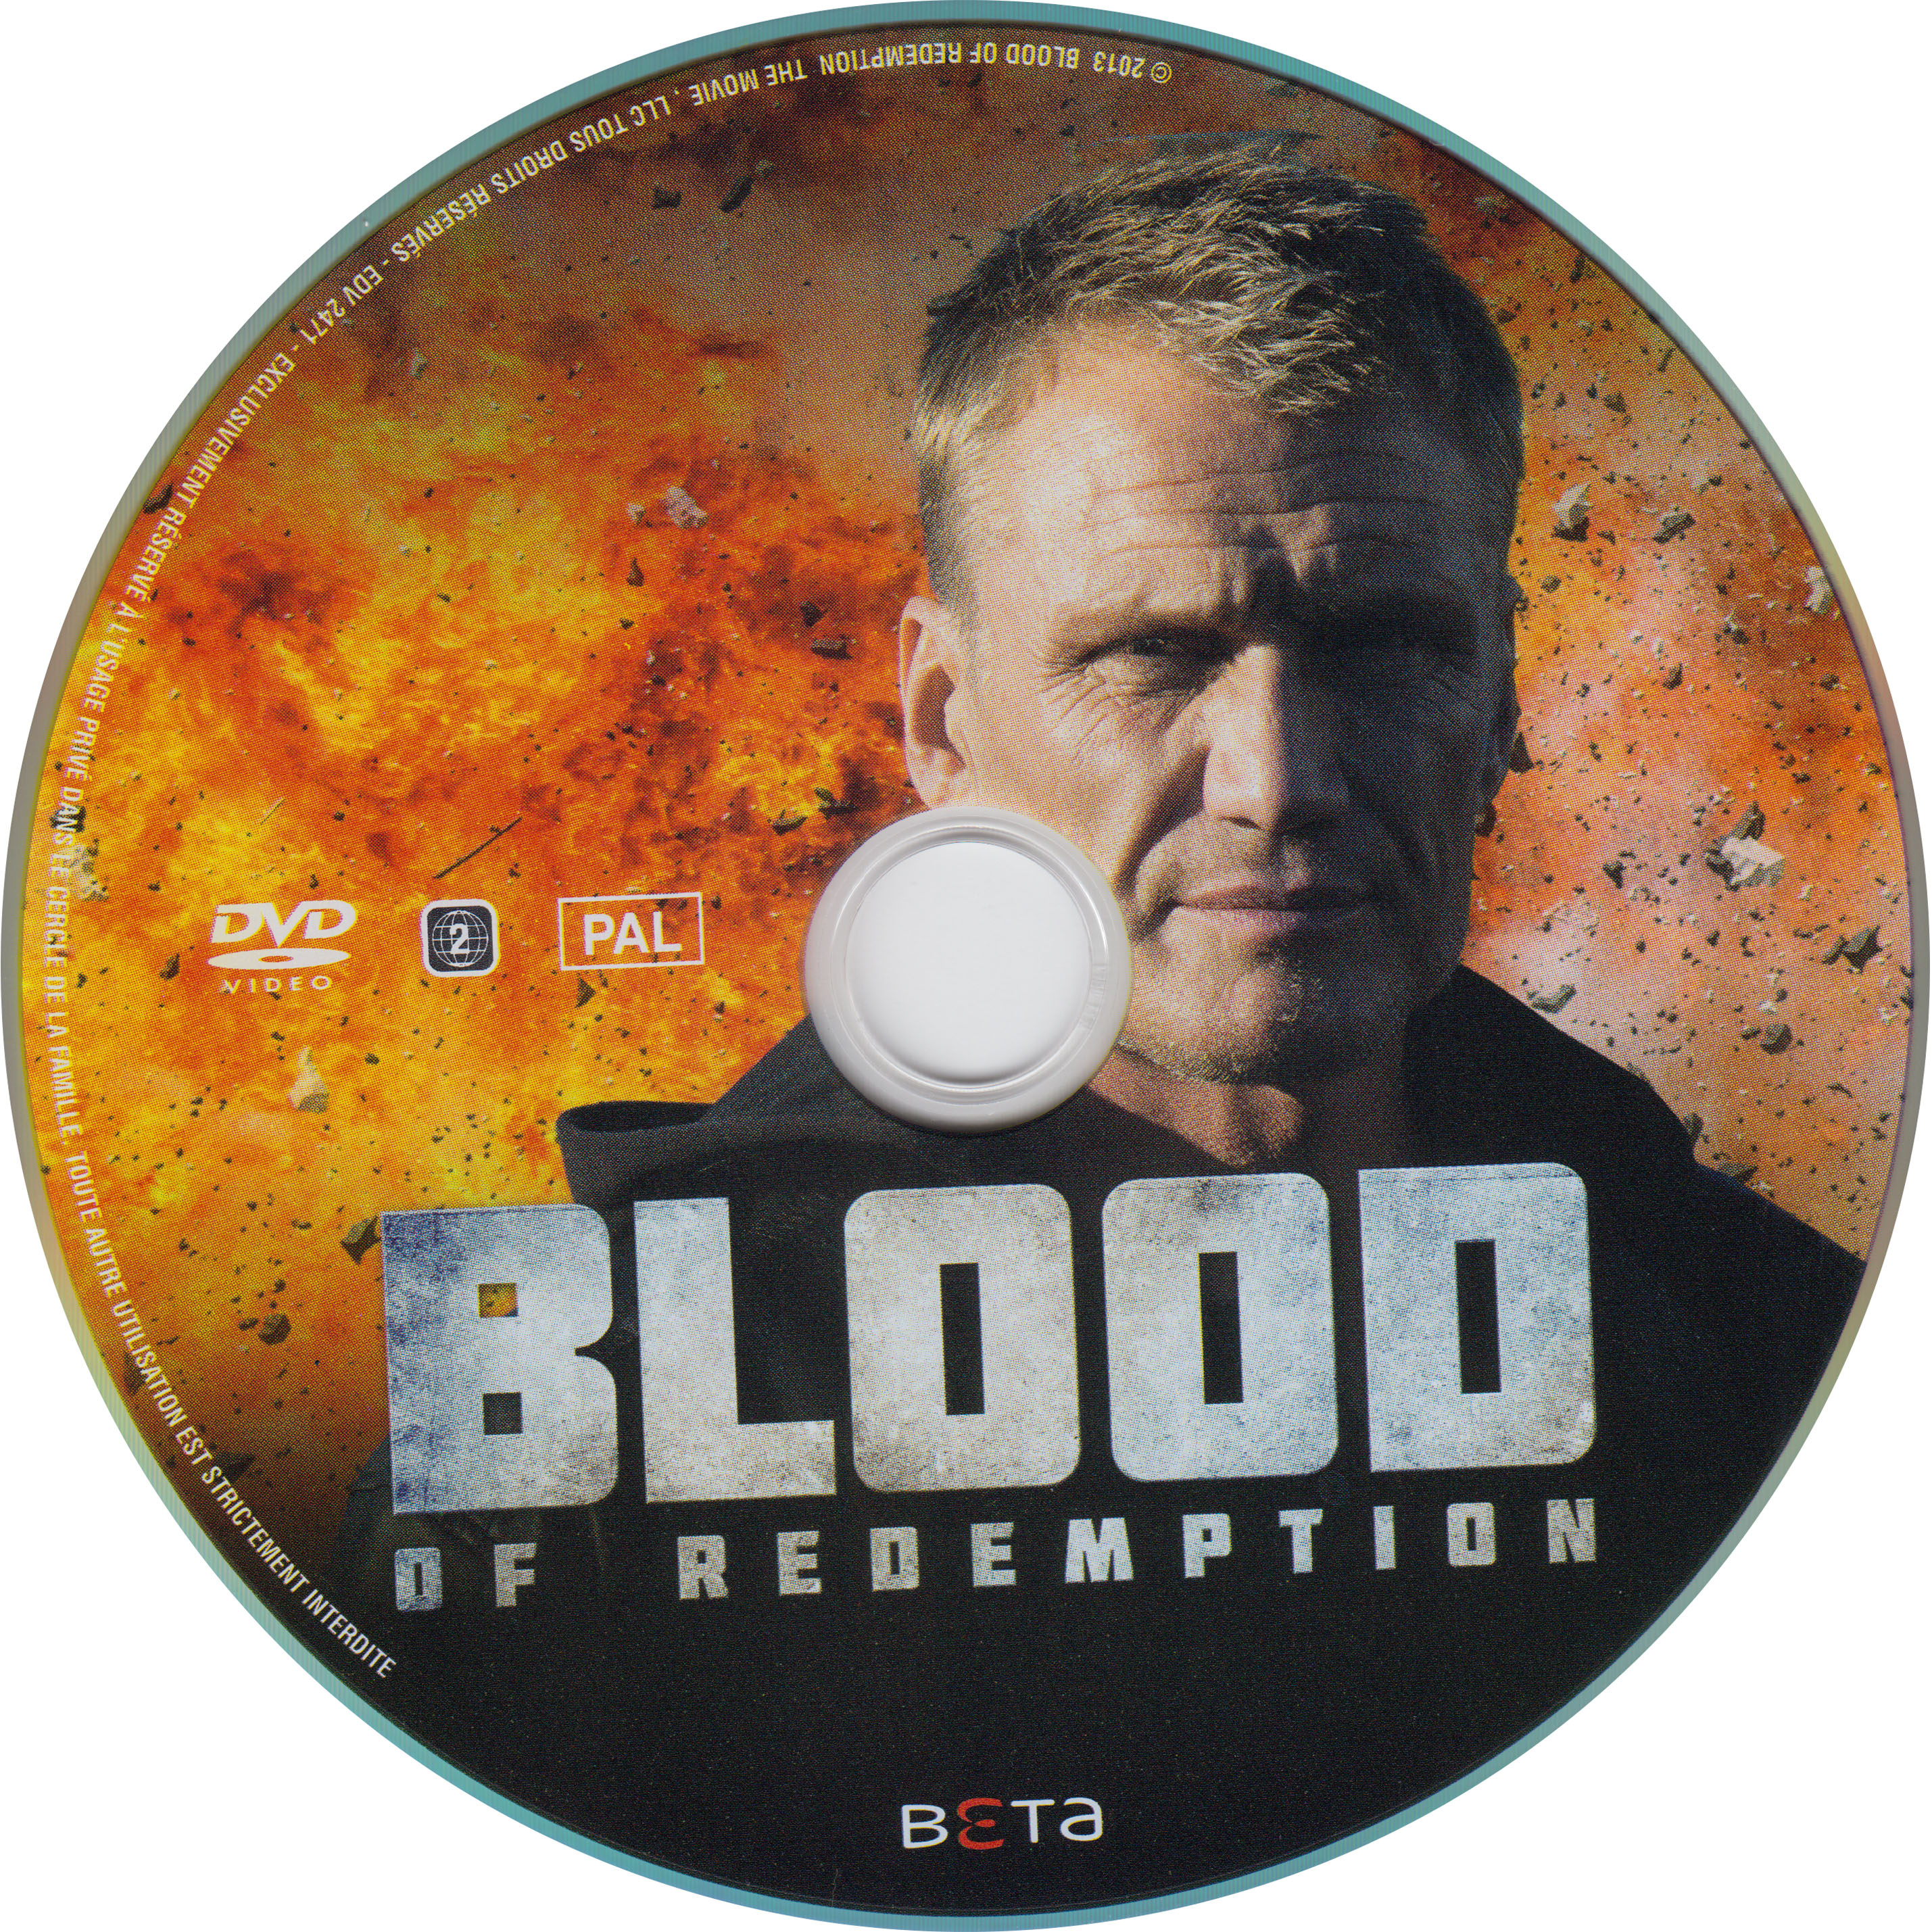 Blood of redemption